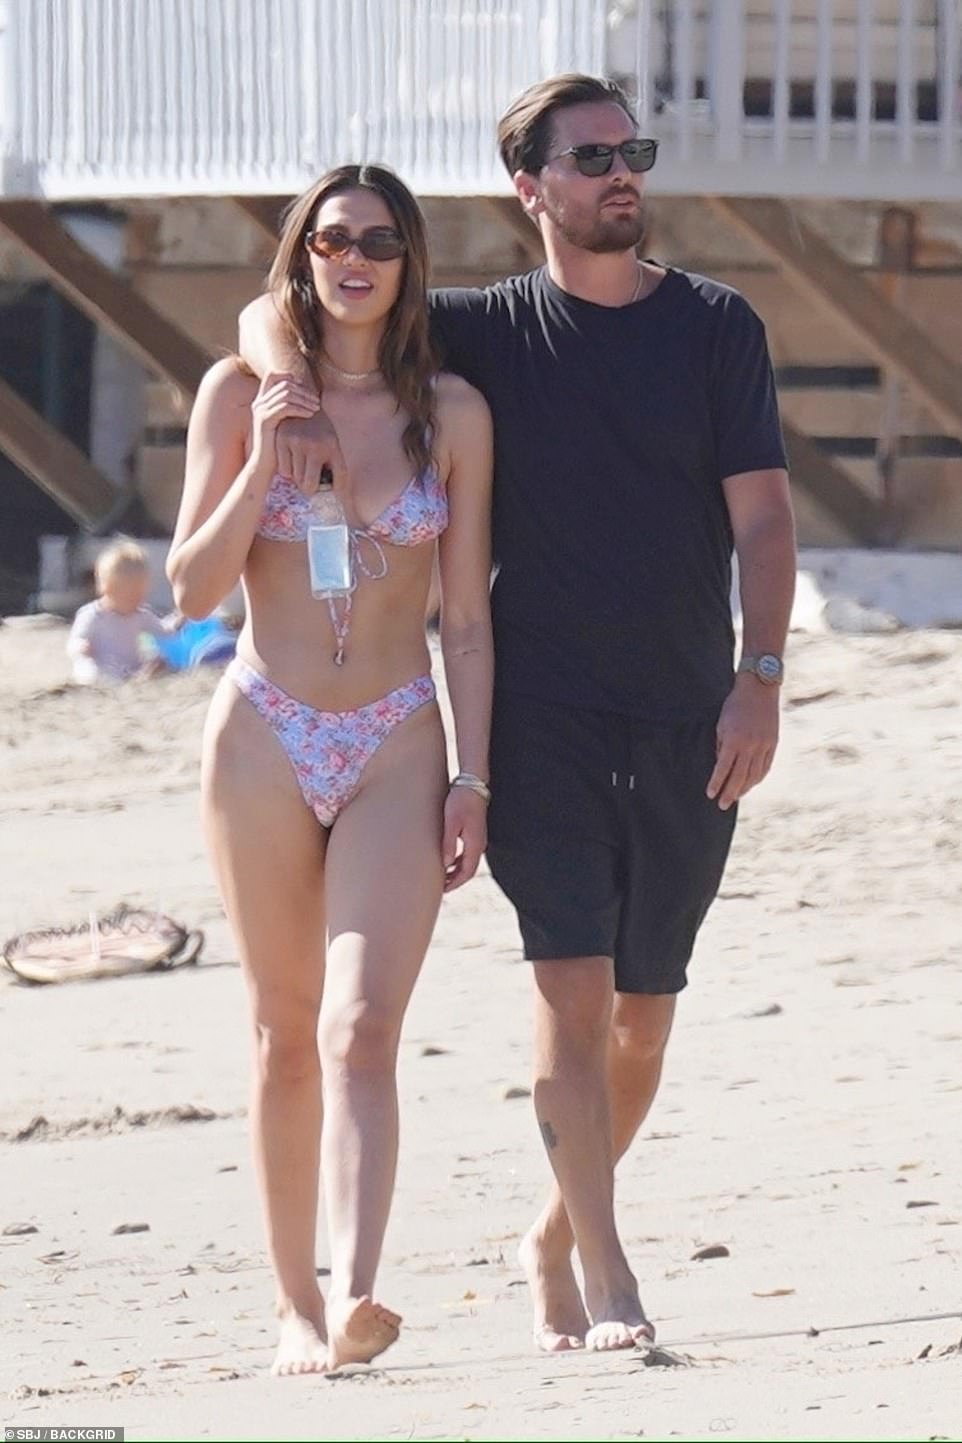 Scott Disick, 37, puts his arm around a bikini-clad Amelia Hamlin, 19, in Malibu